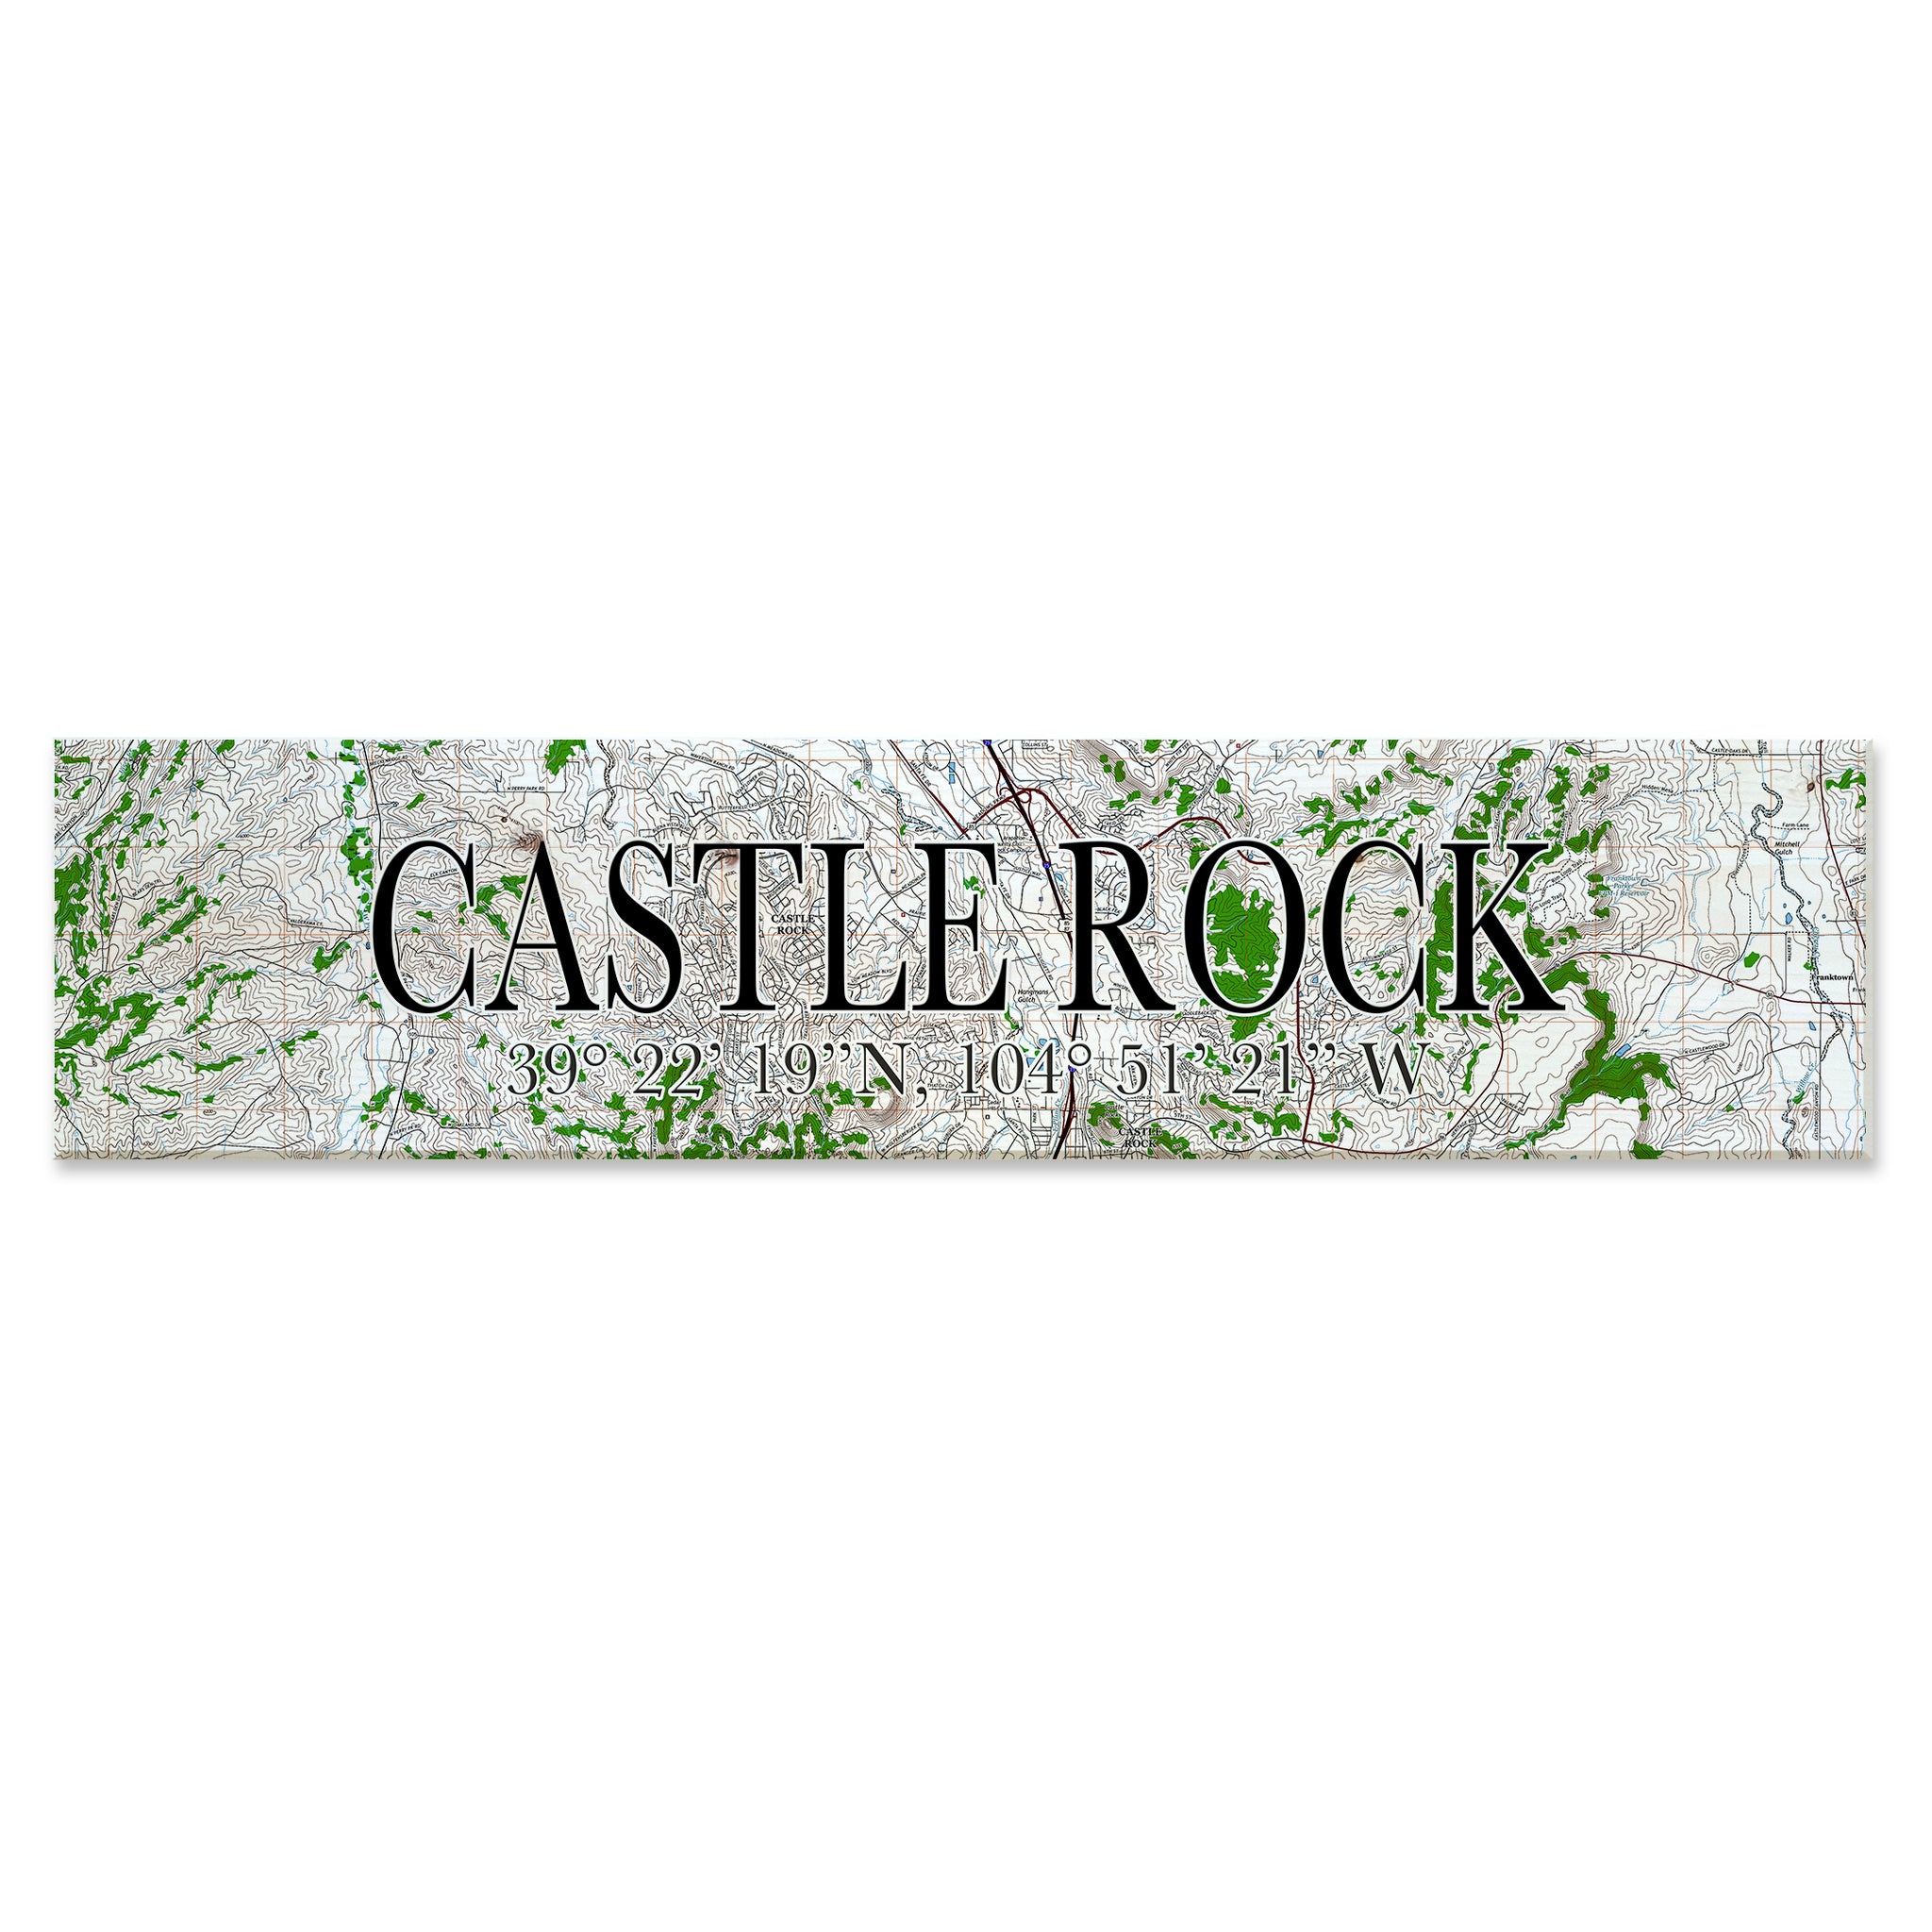 Castle Rock, CO Coordinate Sign